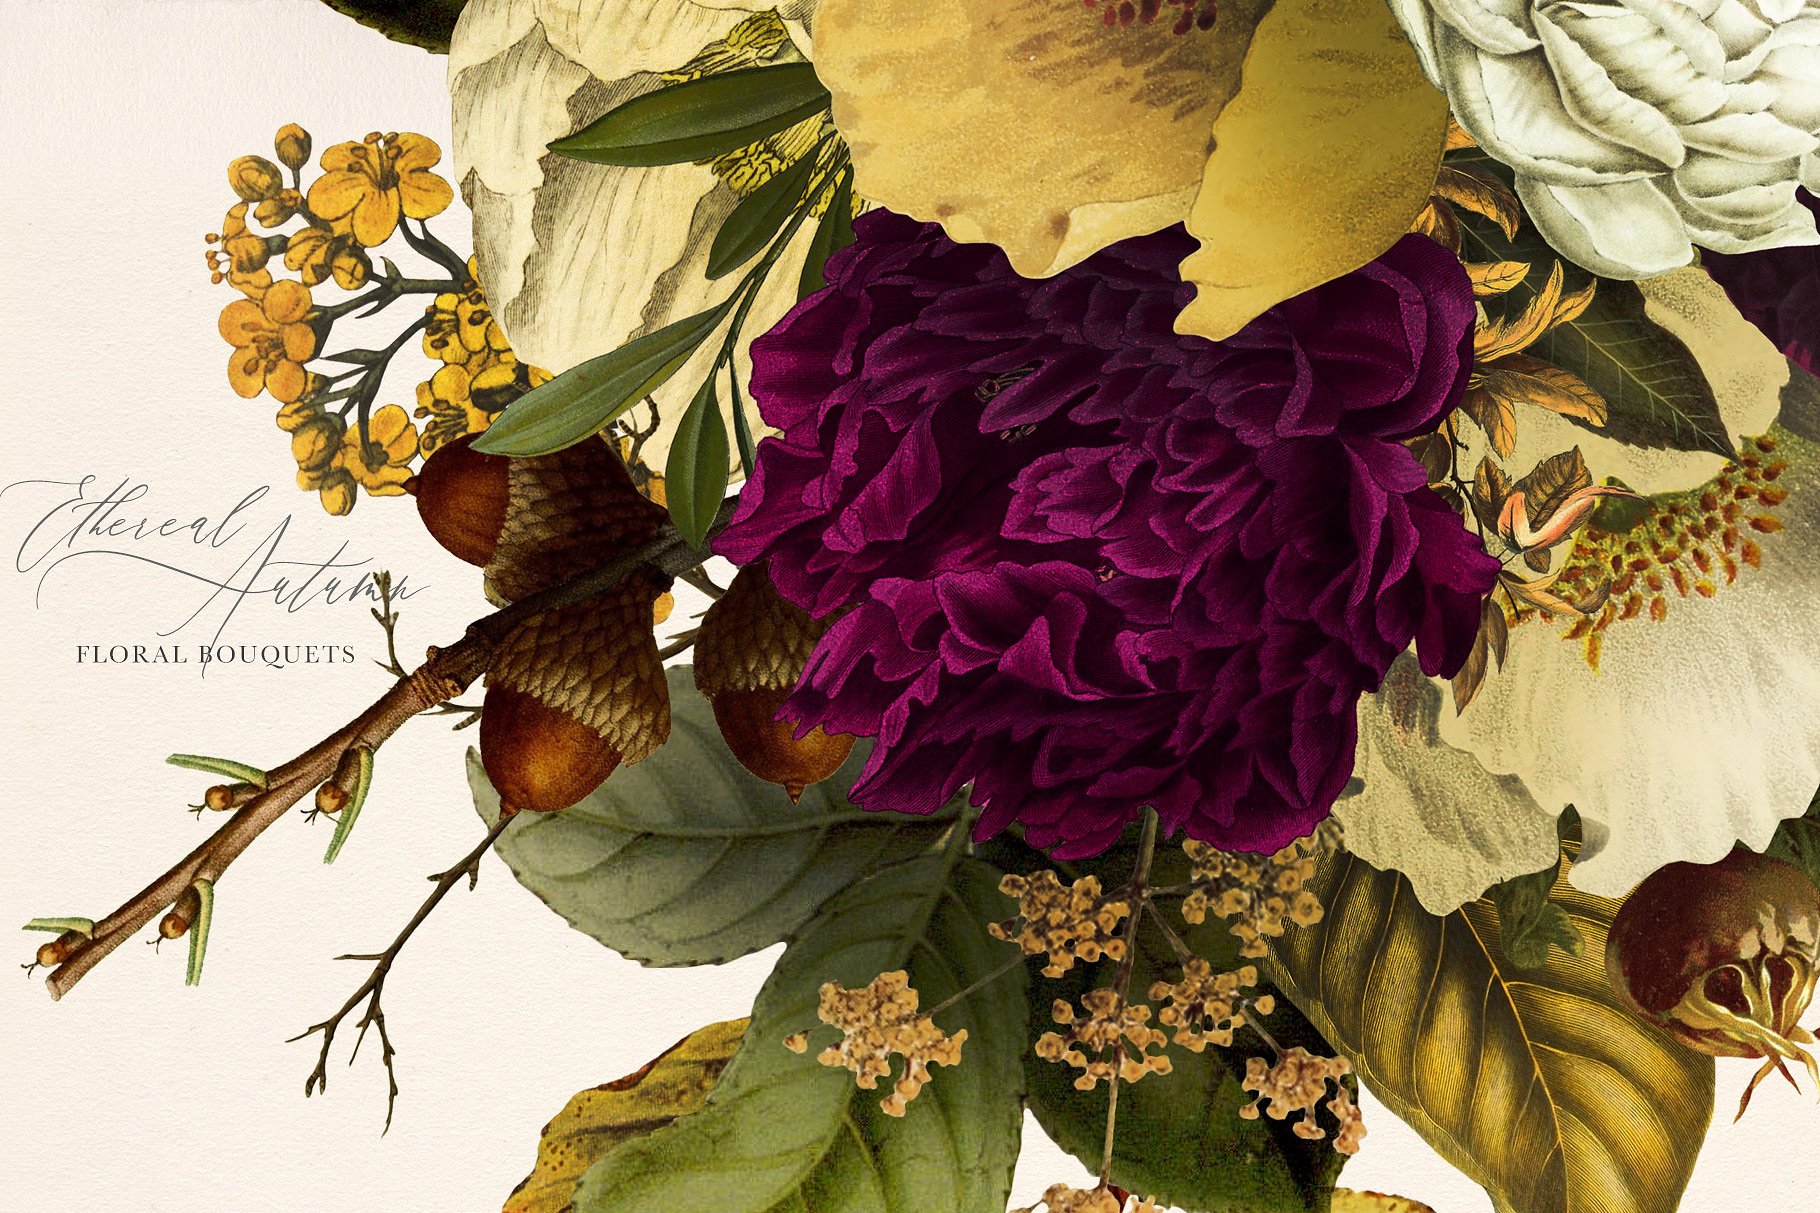 栩栩如生的秋天花束插画 Ethereal Autumn Floral Bouquets插图6